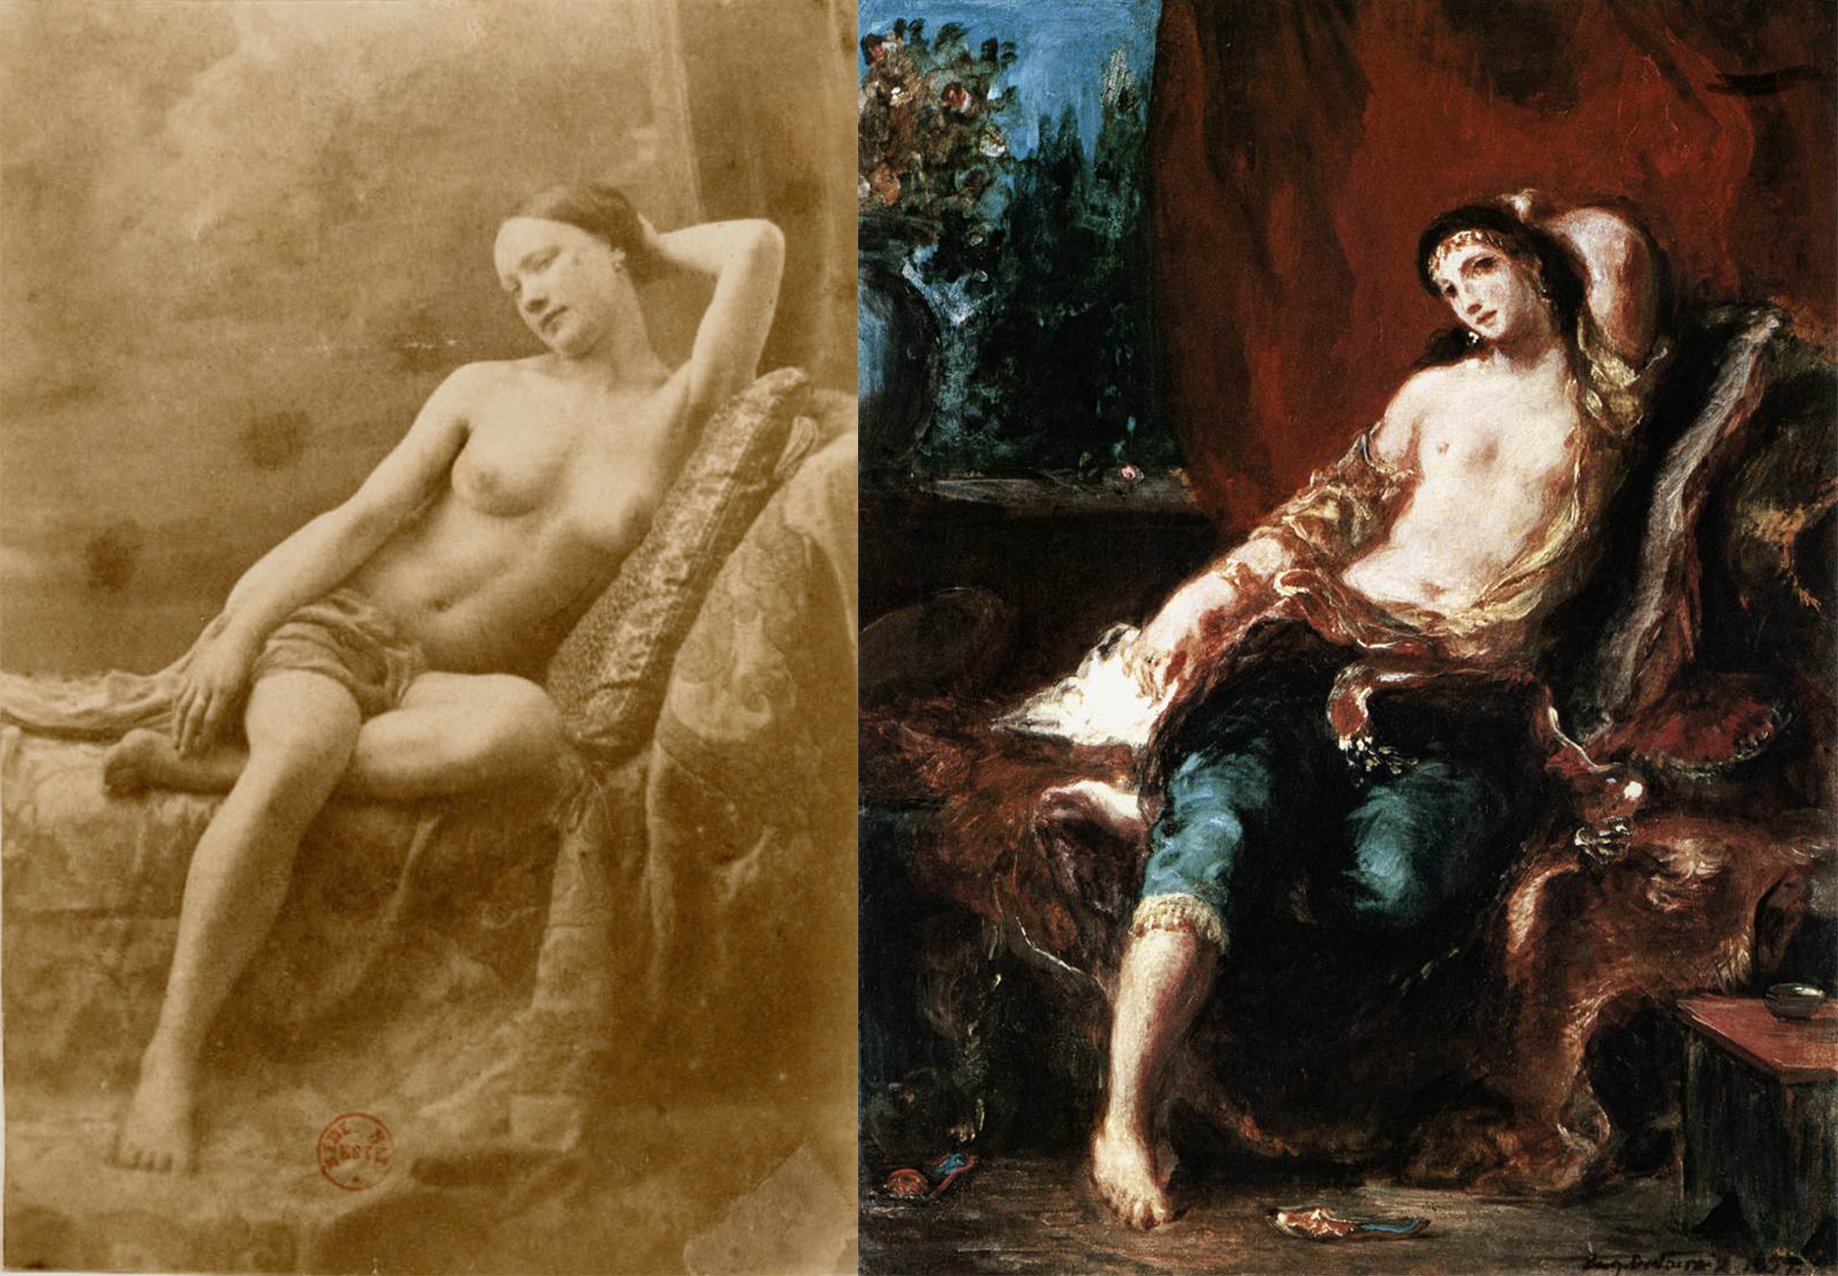 女僕/女僕 by Eugène Durieu / Eugène Delacroix - 1833/1857 